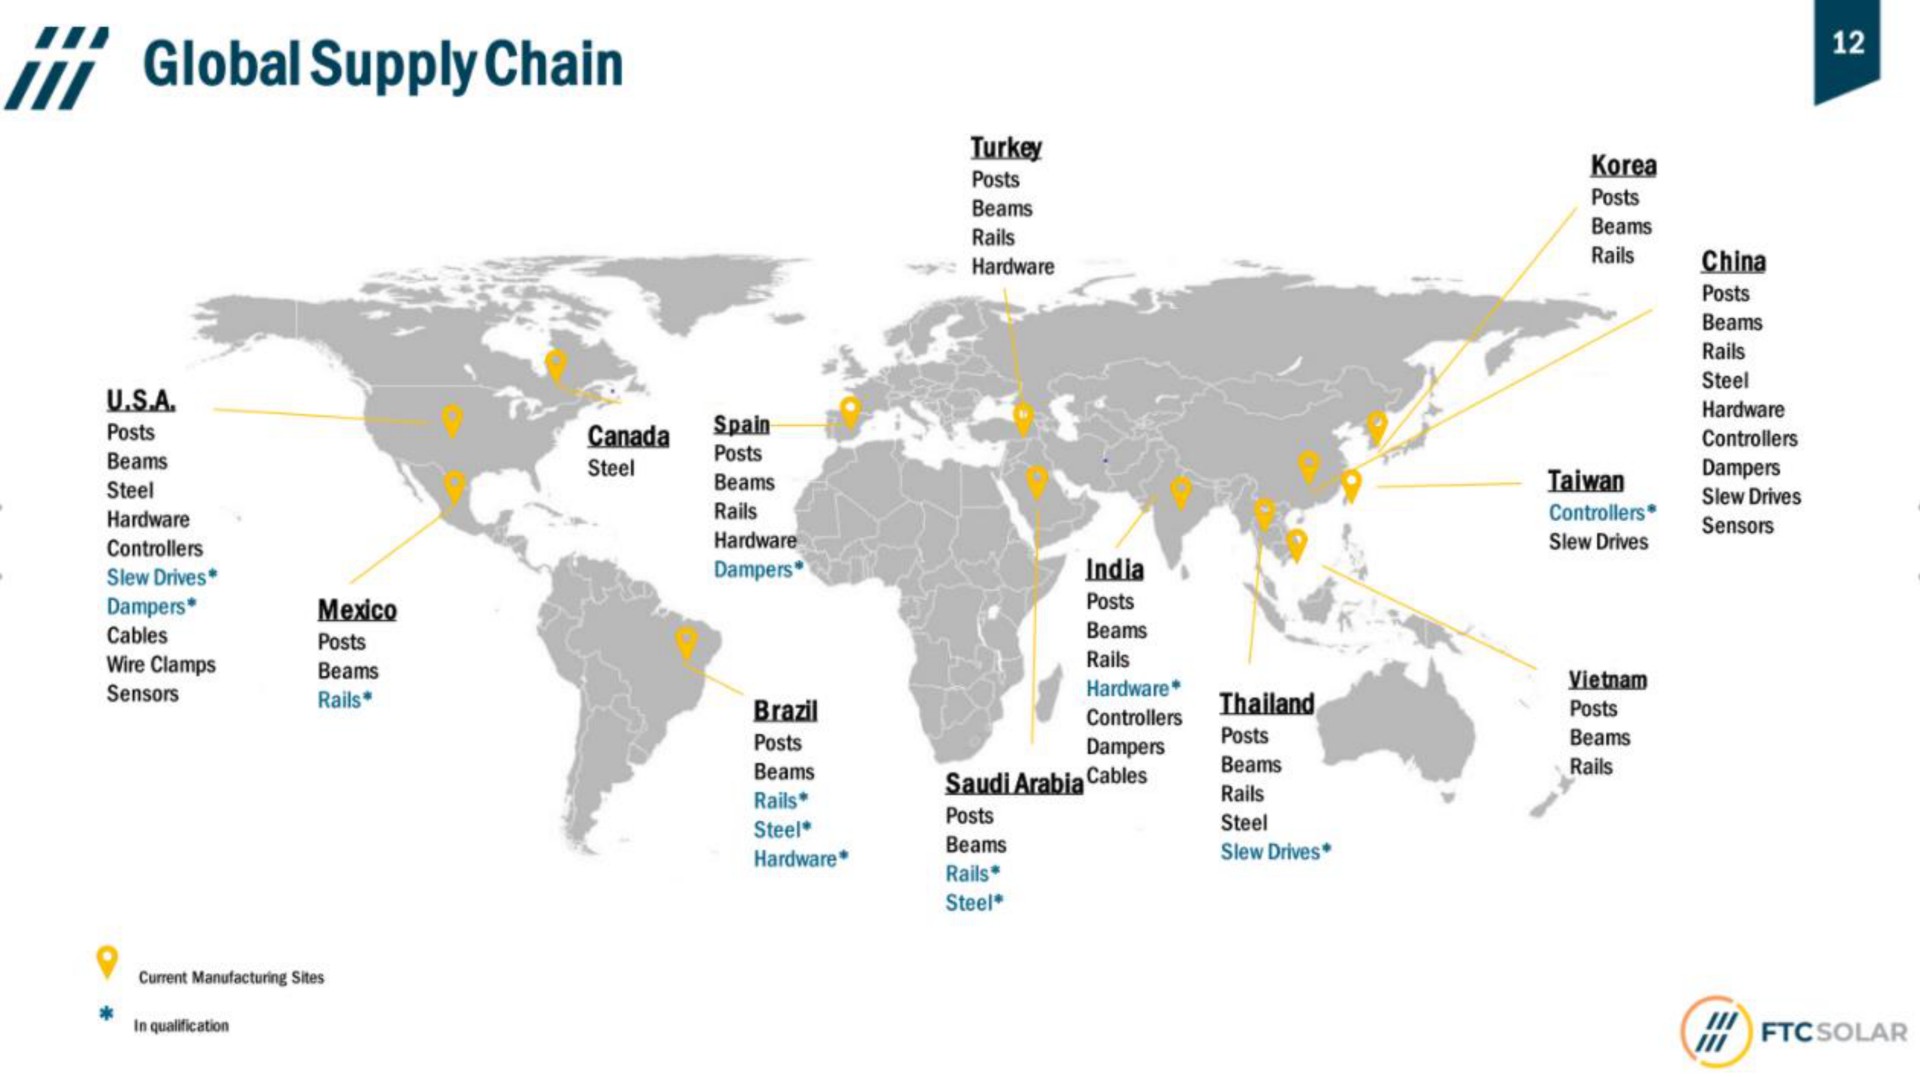 global supply chain | FTC Solar